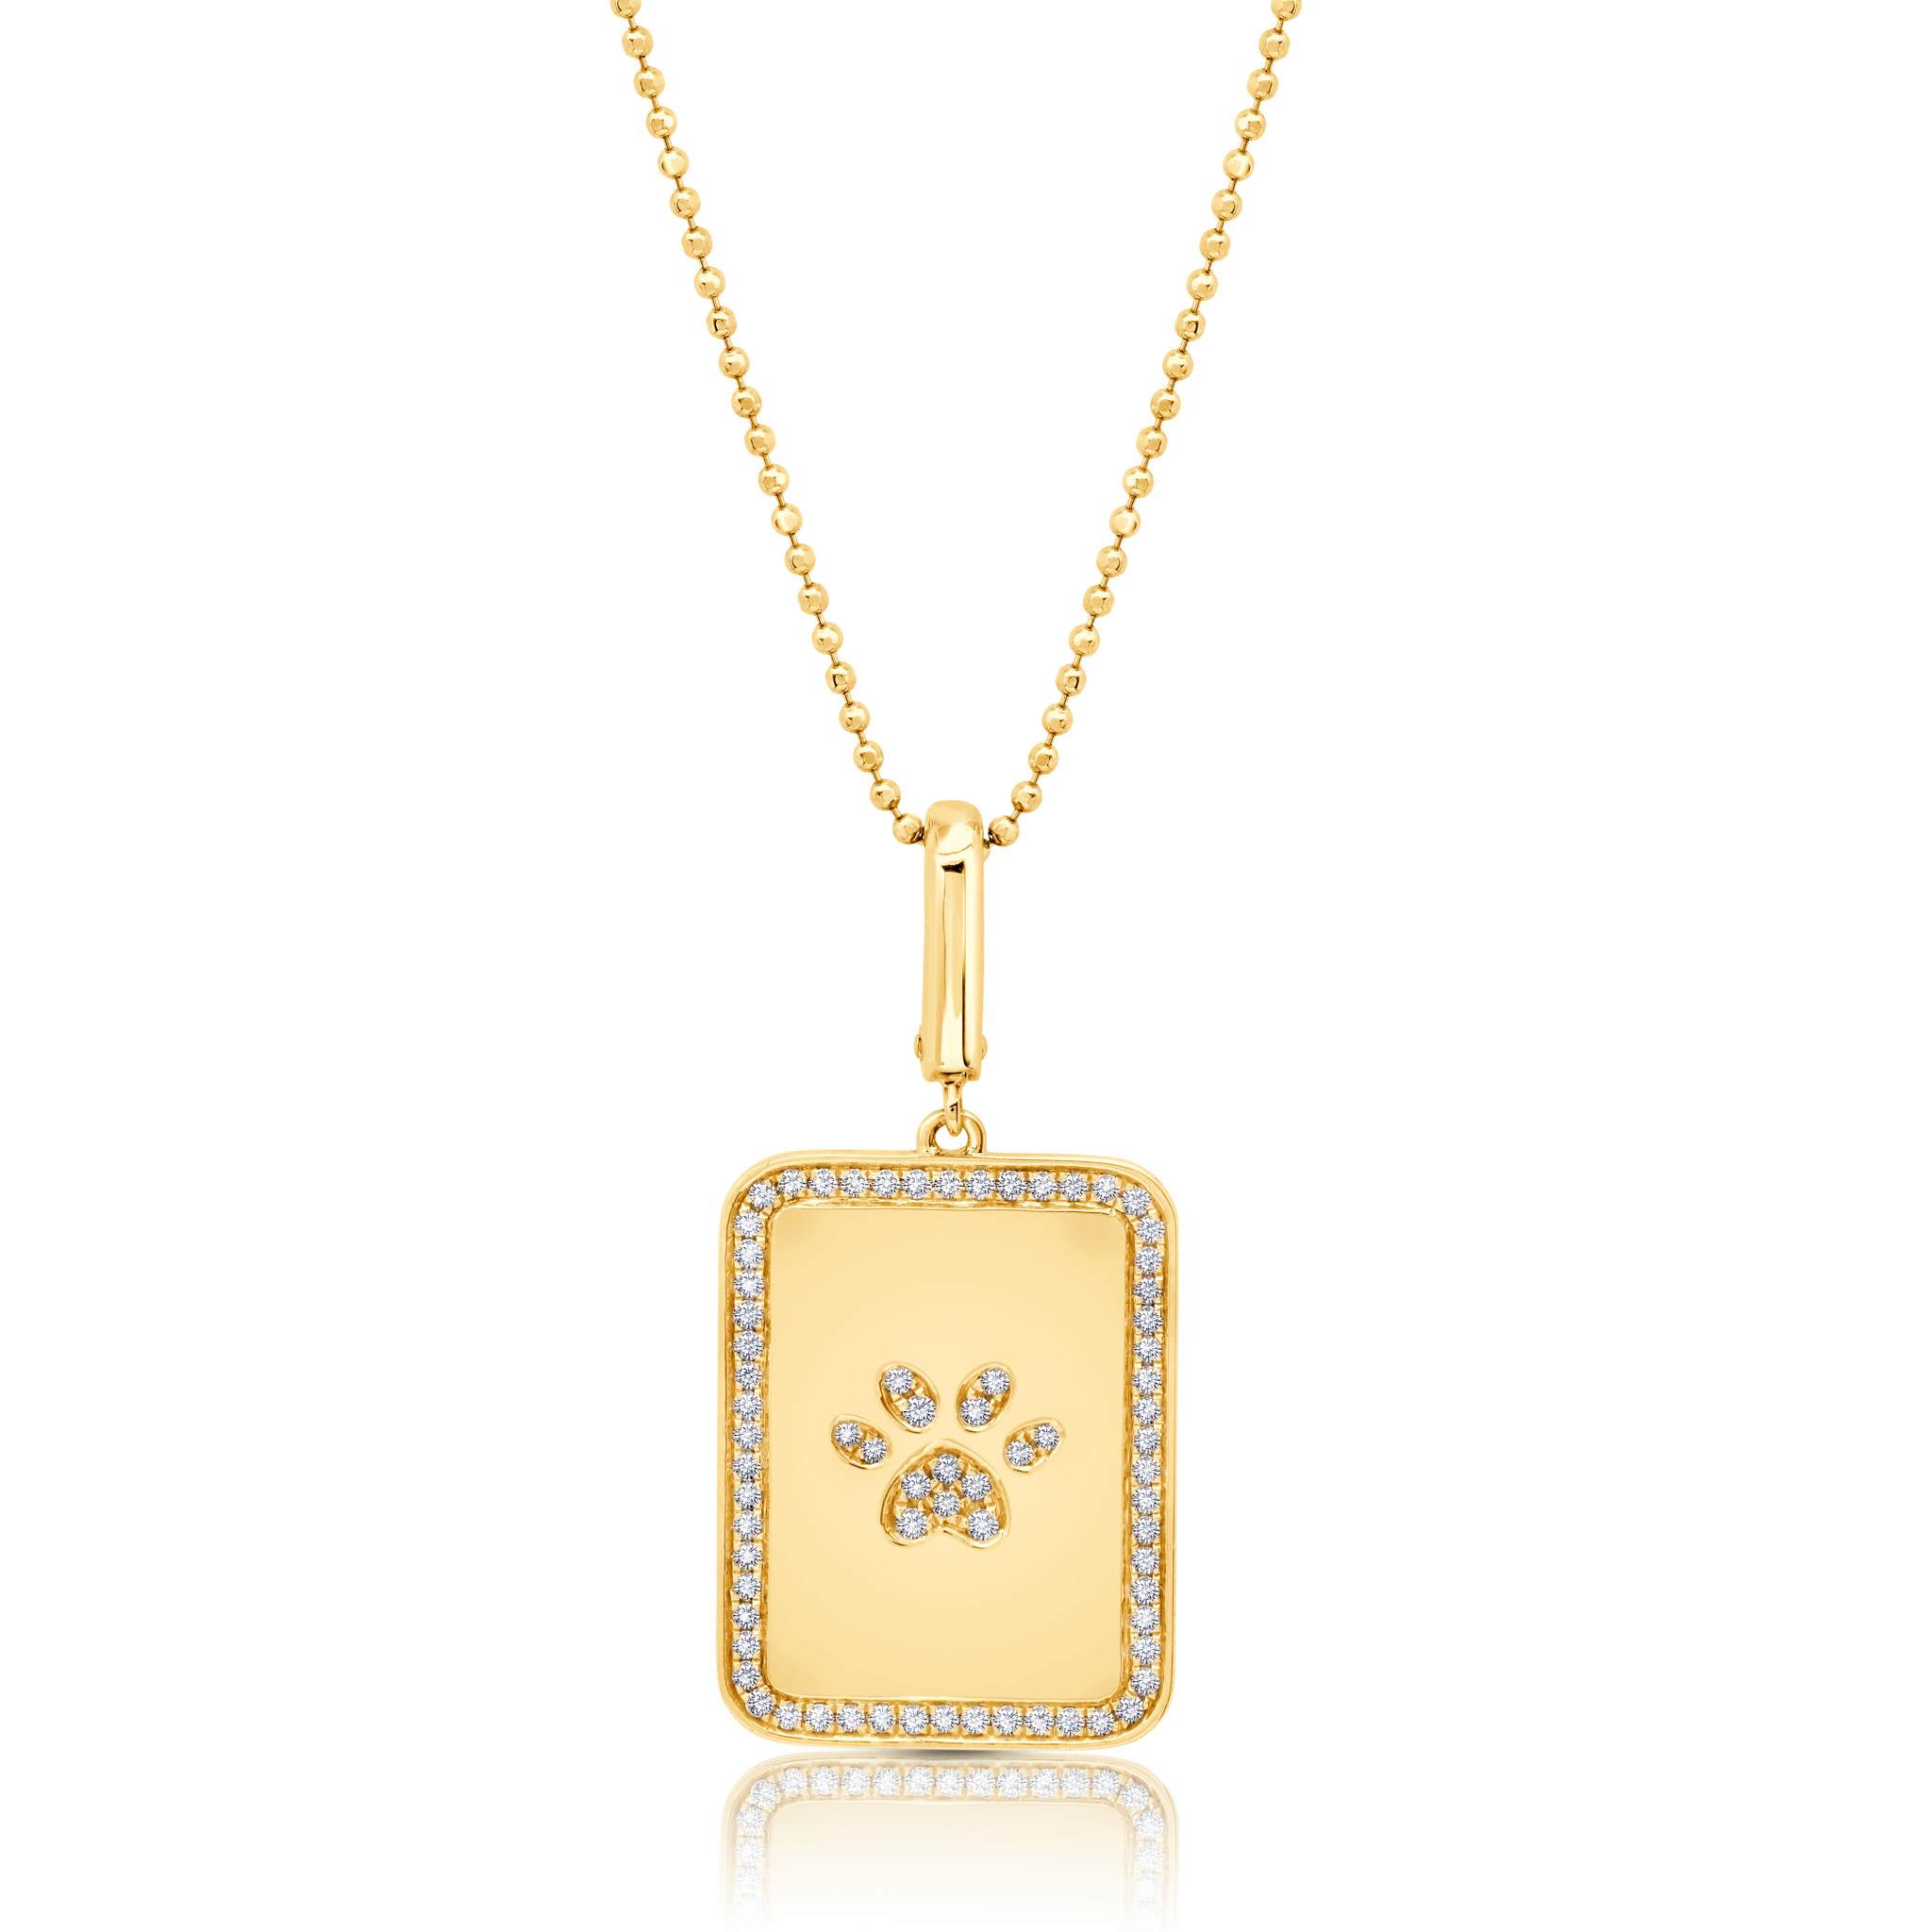 Graziela Gems - Necklace - Dog Paw Rectangle Pendant - Yellow Gold 14K Diamond